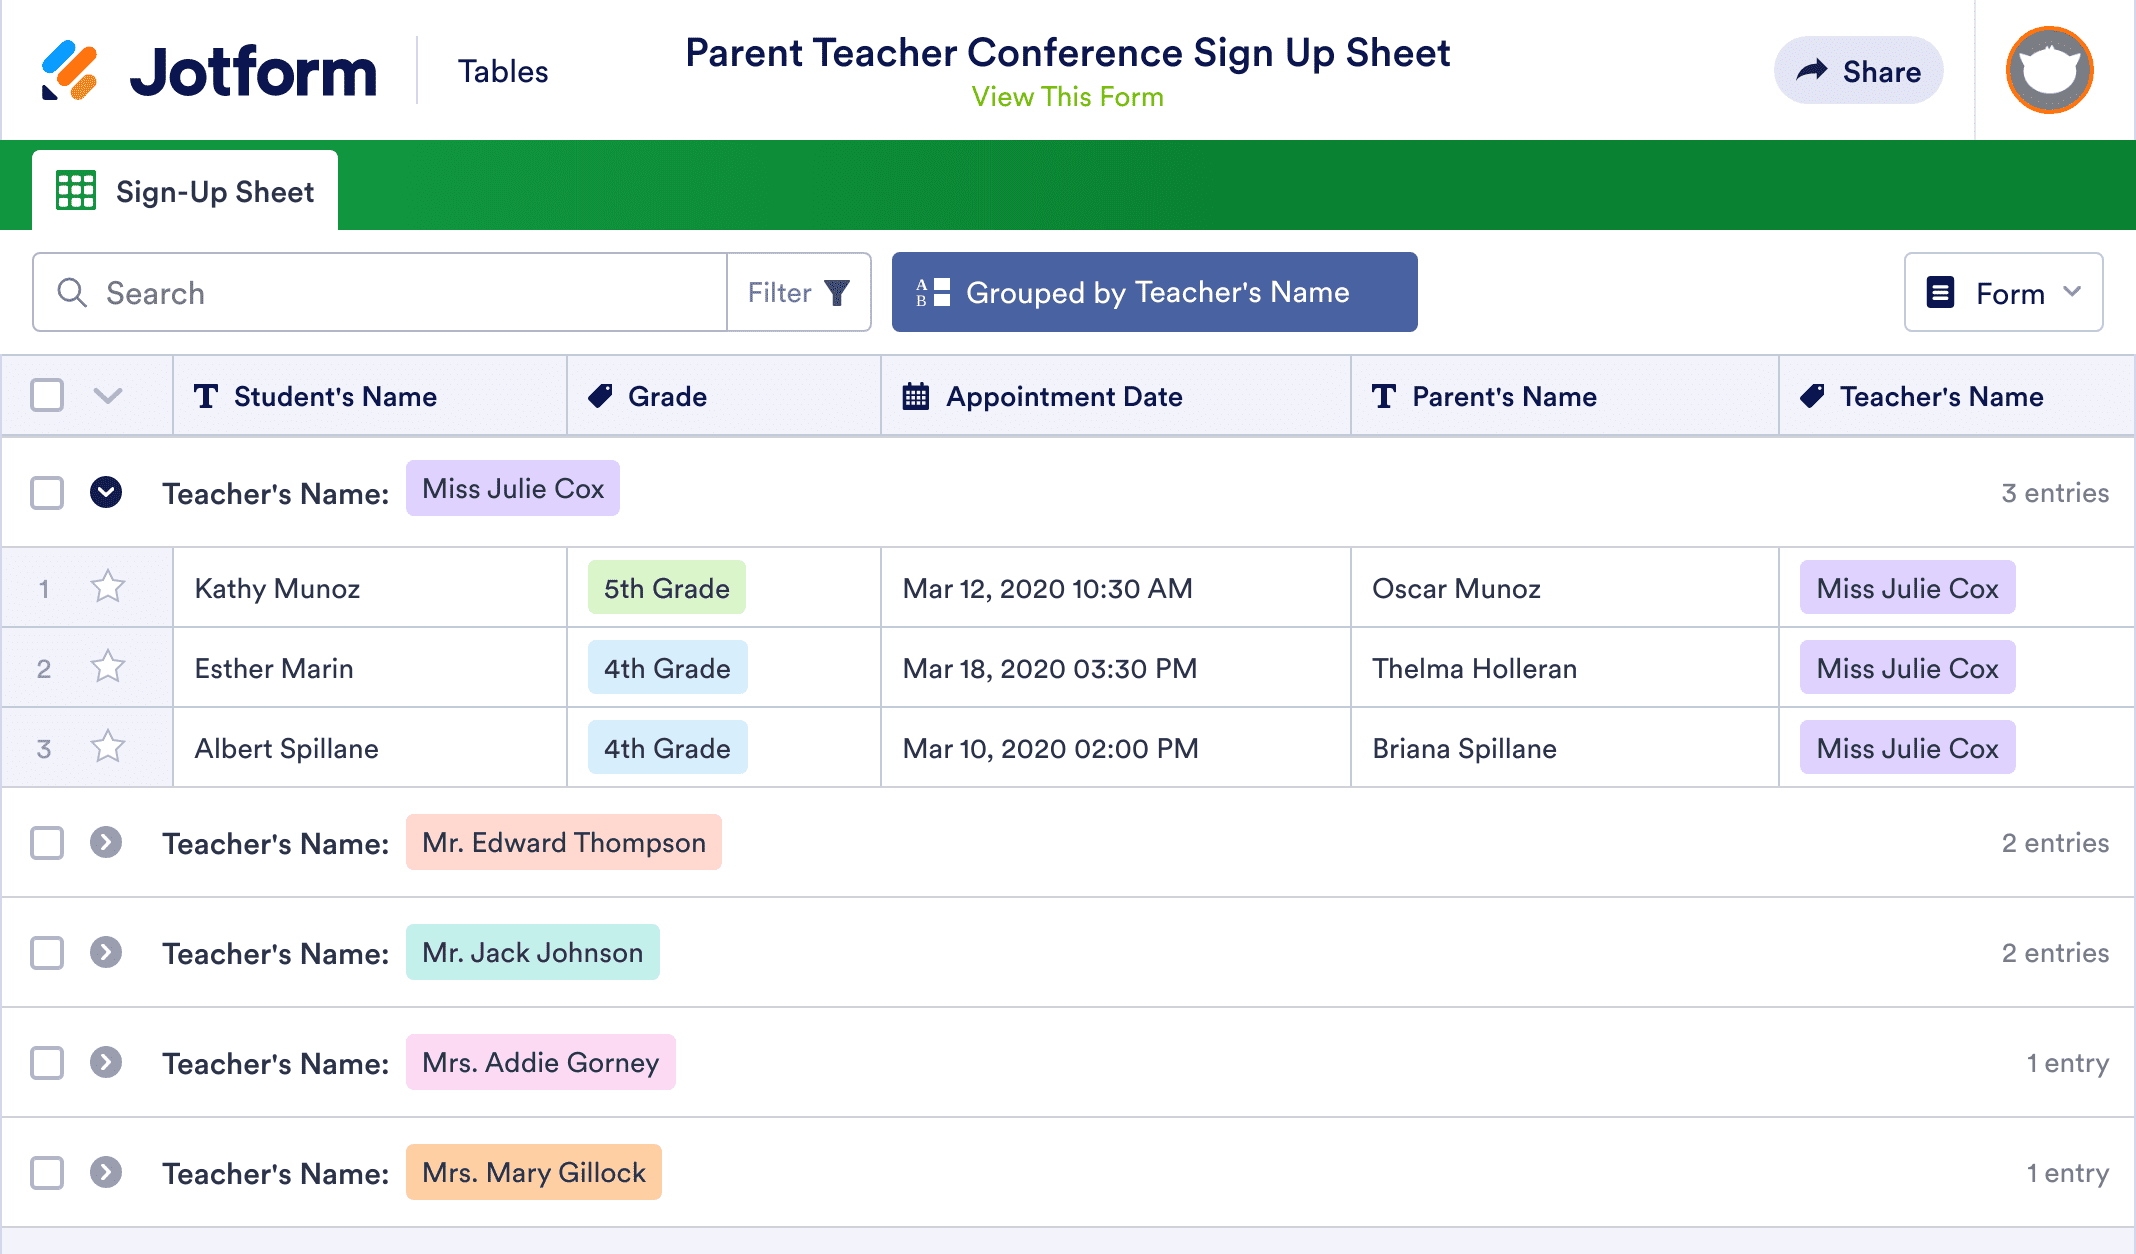 Parent Teacher Conference Sign Up Sheet Template | Jotform Tables